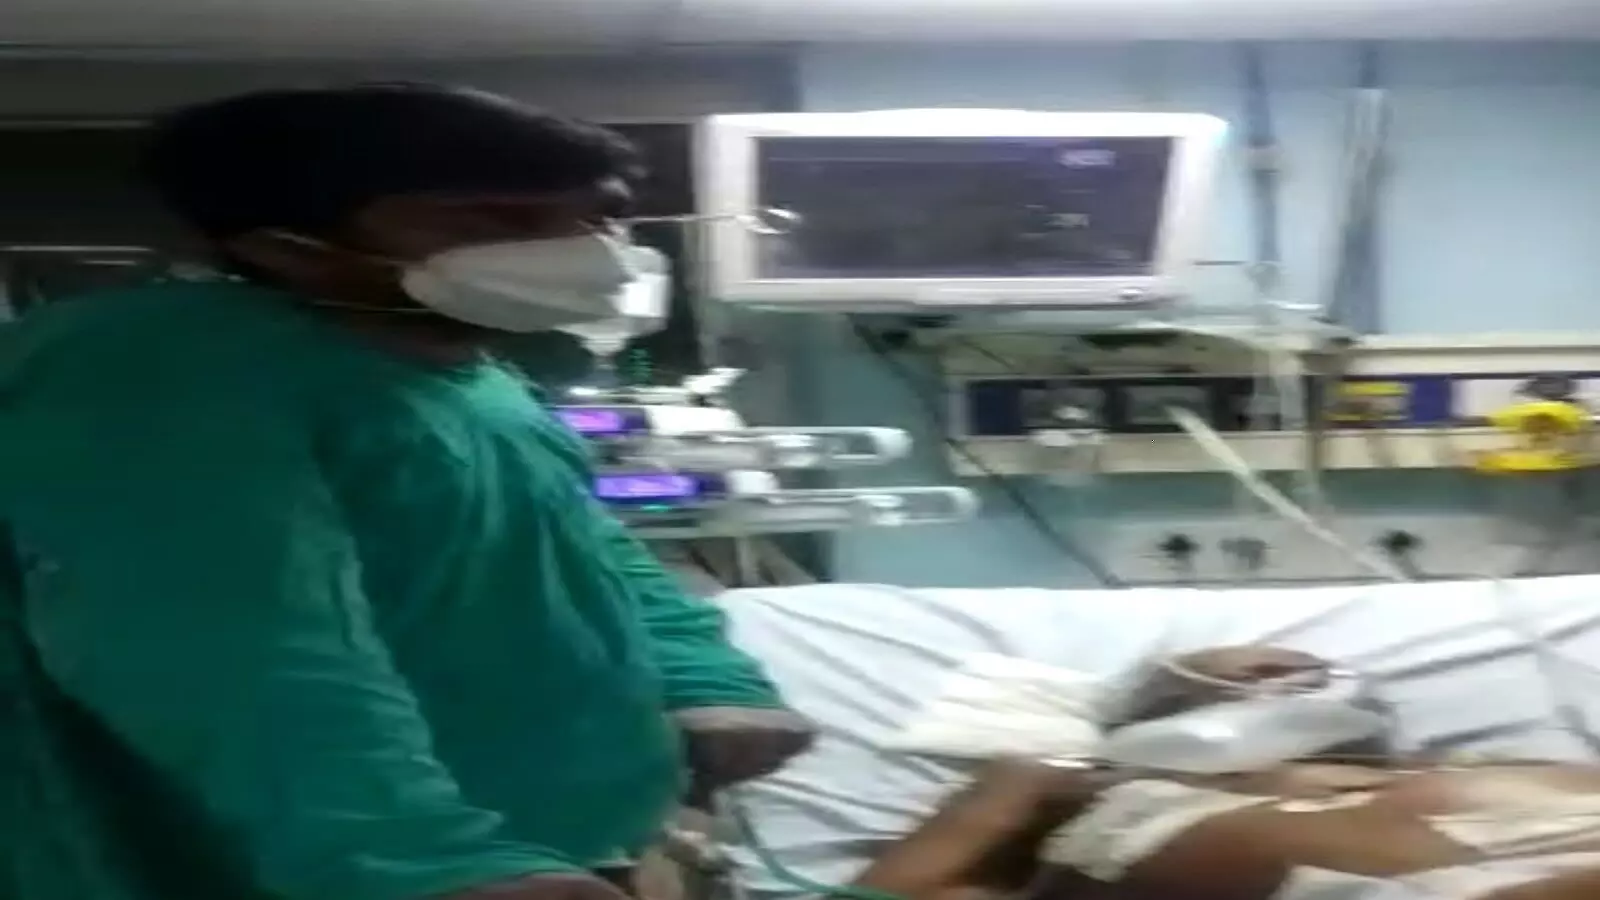 वाराणसी: फिर सामने आई BHU अस्पताल की लापरवाही, मरीज को चढ़ाया गलत प्लाज्मा